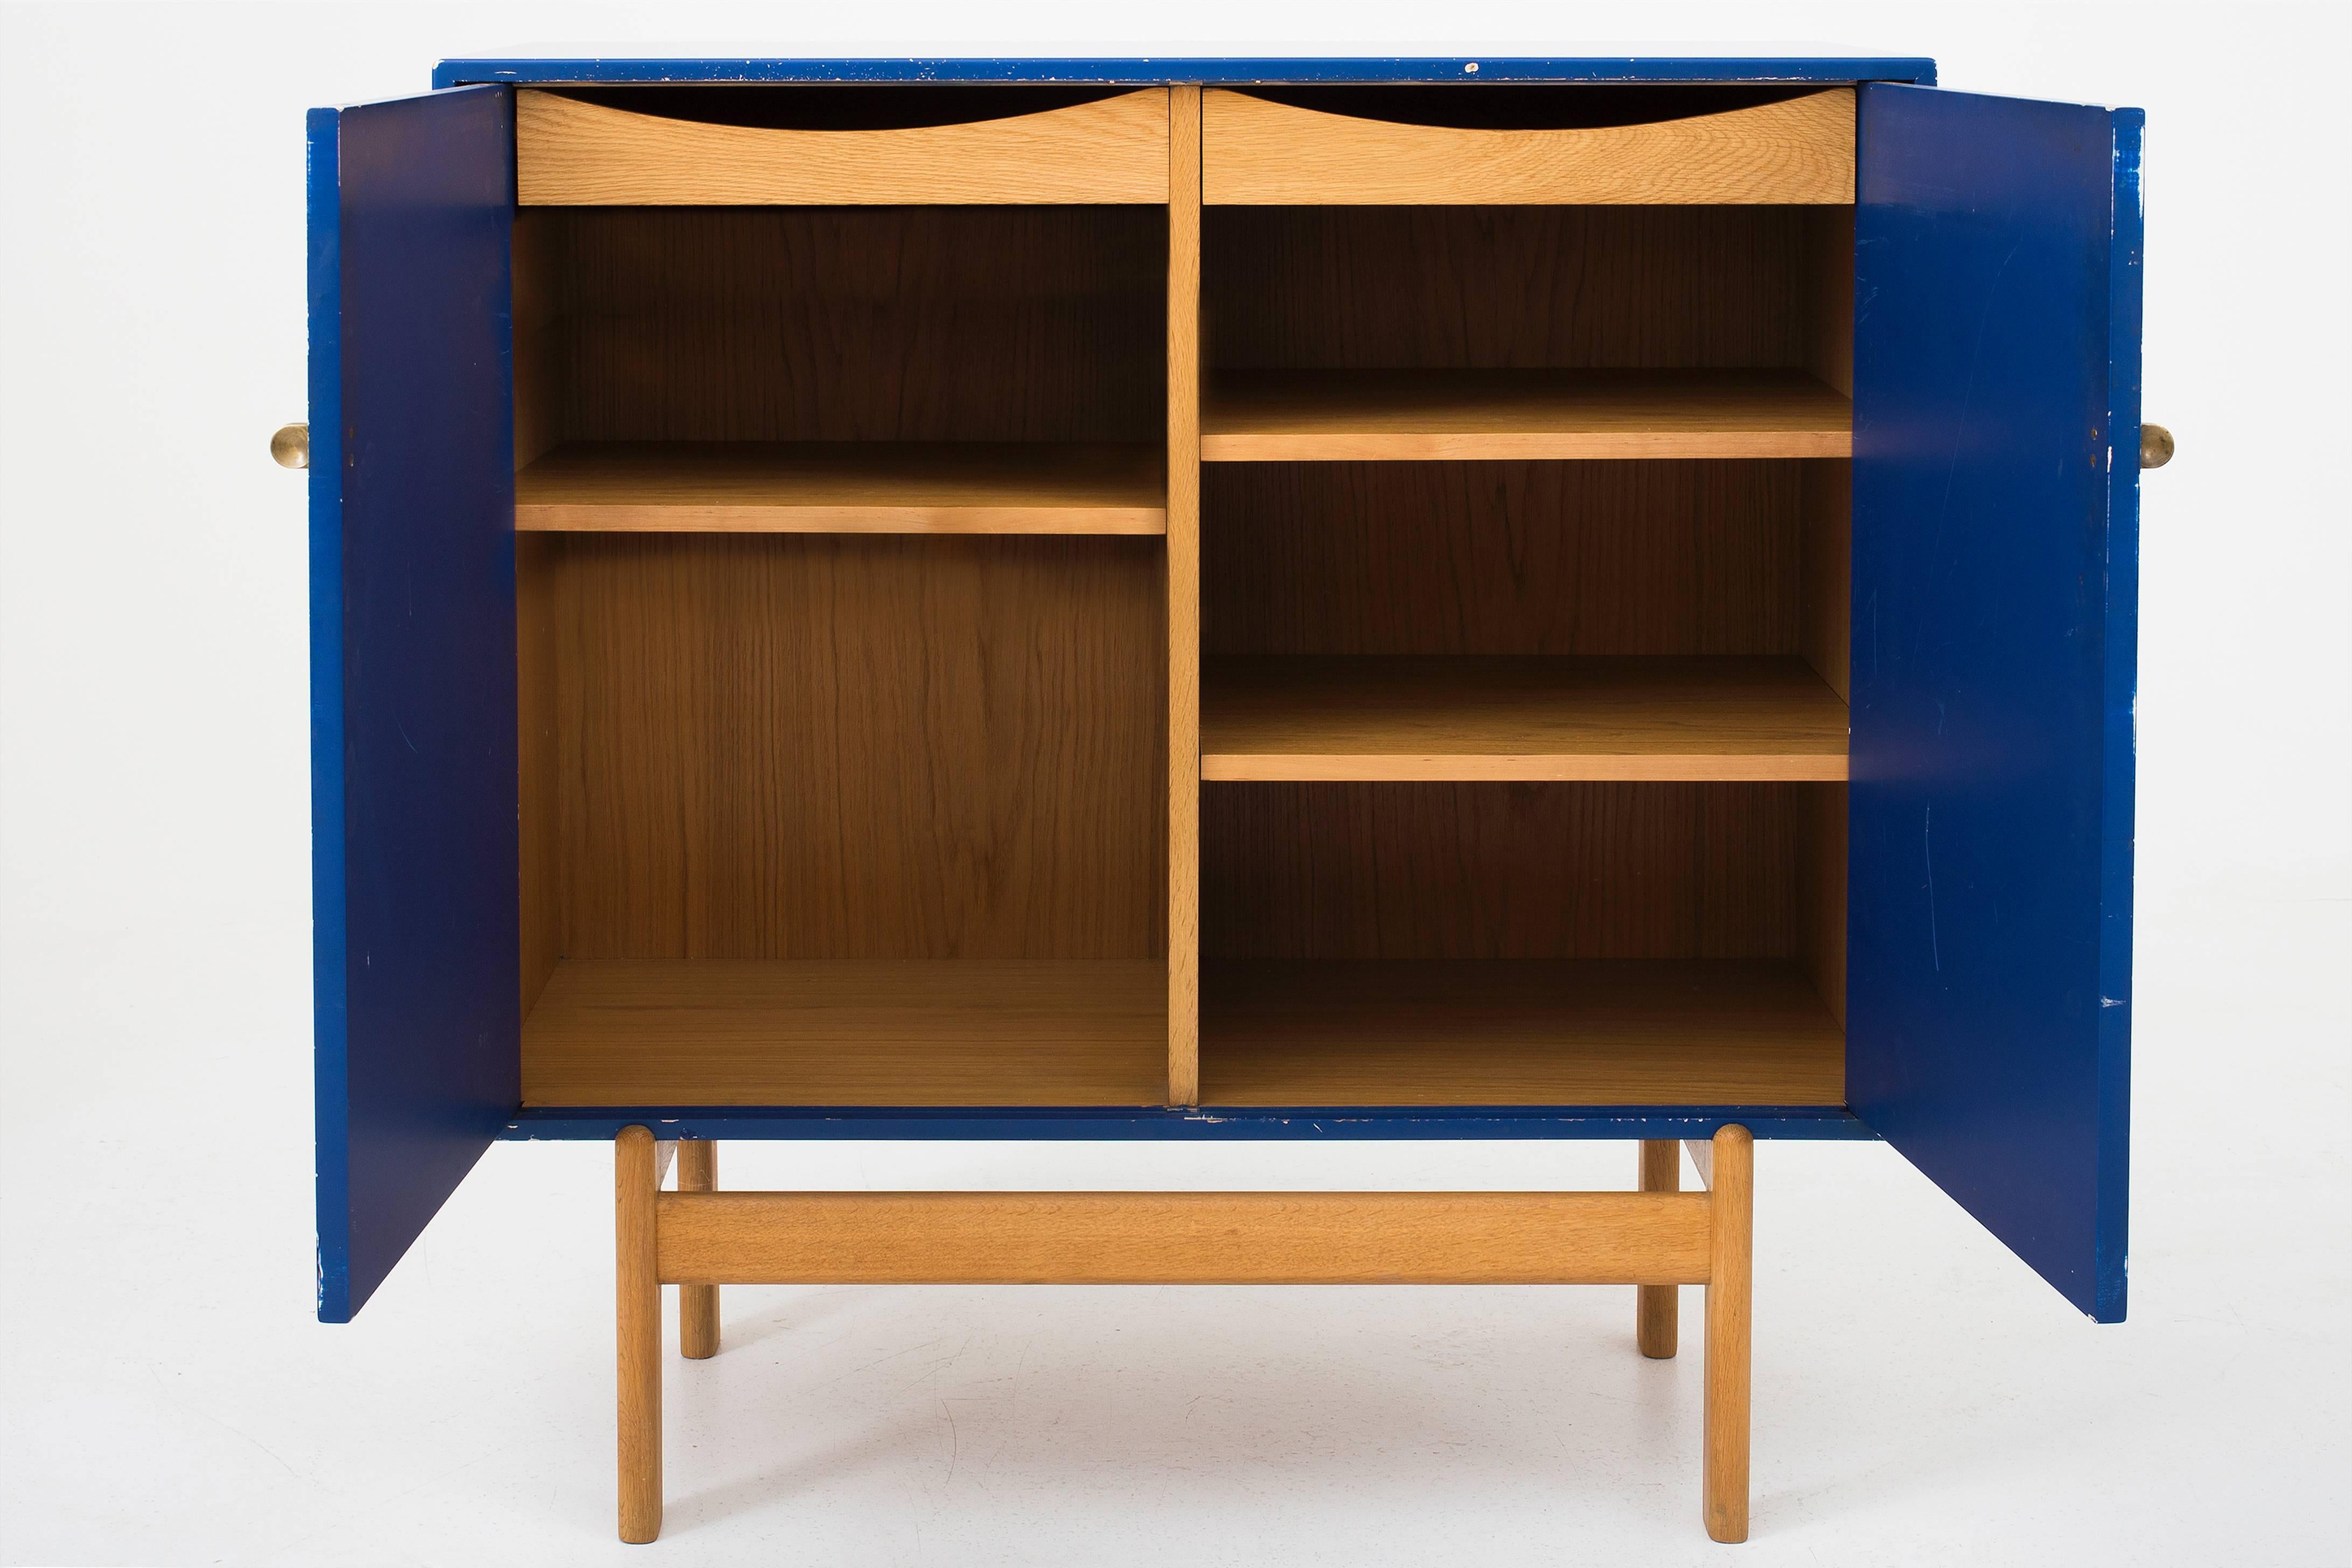 Cabinet designed by Tove and Edvard Kindt-Larsen. Cabinet in blue lacquered oak, legs in oak and handles in brass. Maker Säfle, Sweden, 1960.